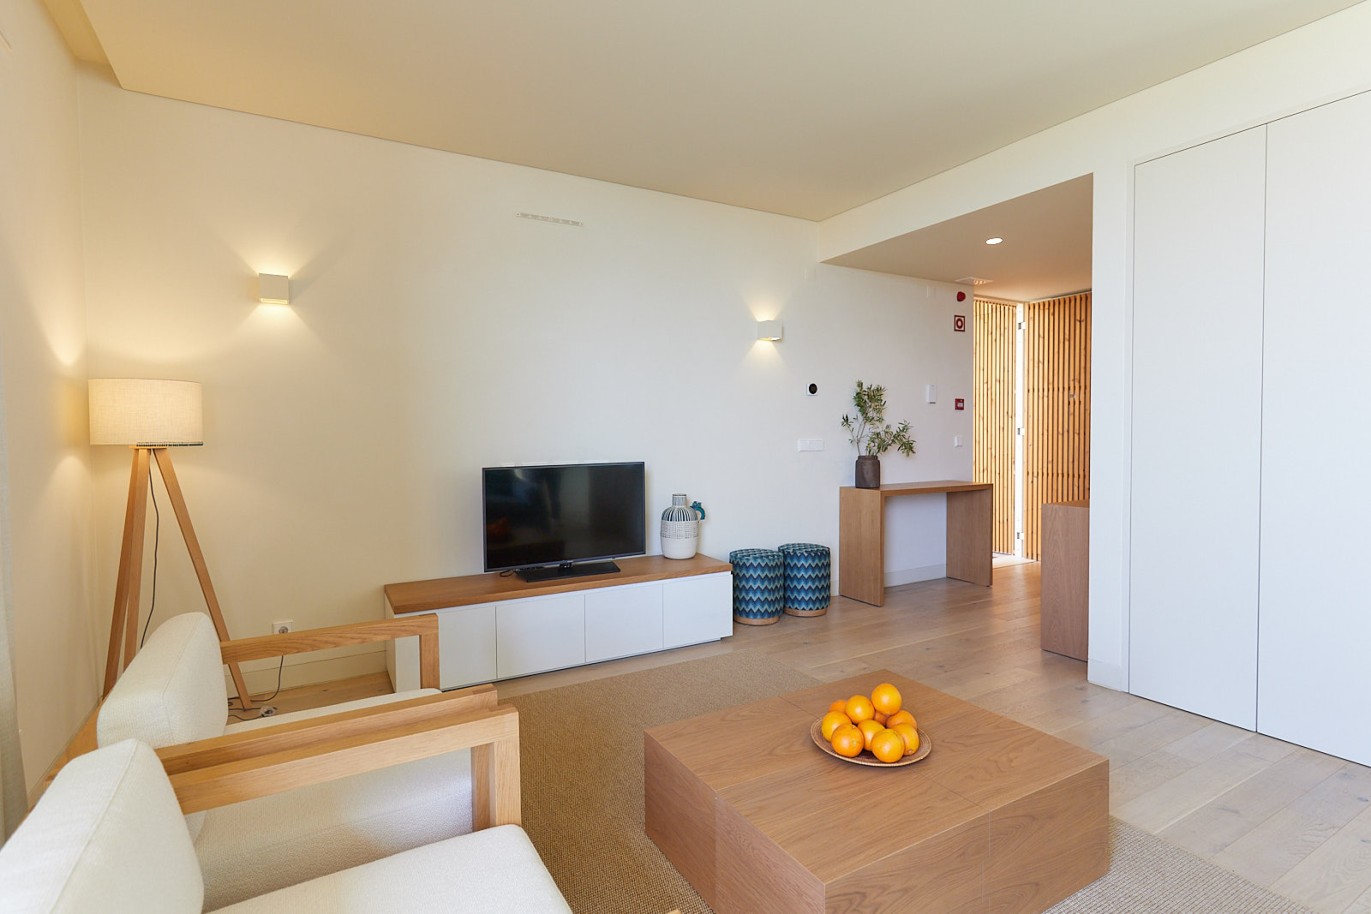 2 bedroom apartment in resort, for sale in Porches, Algarve_230591